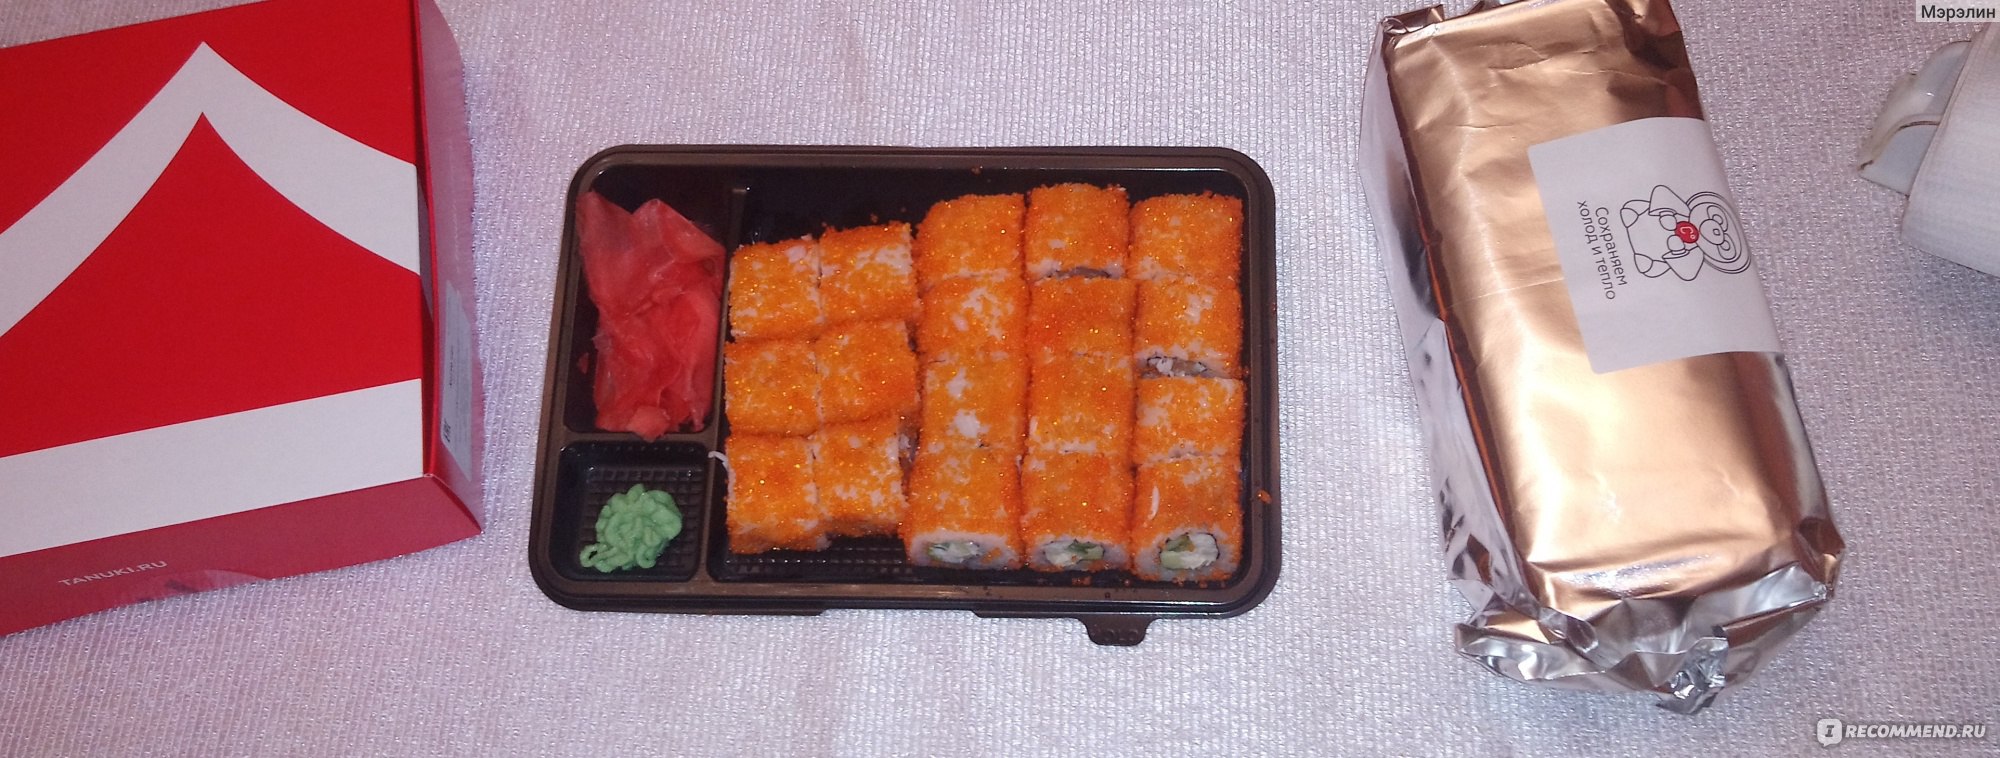 Тануки доставка цена. Тануки японская кухня. Тануки суши ресторан. Тануки упаковка. Упаковка для суши Тануки.